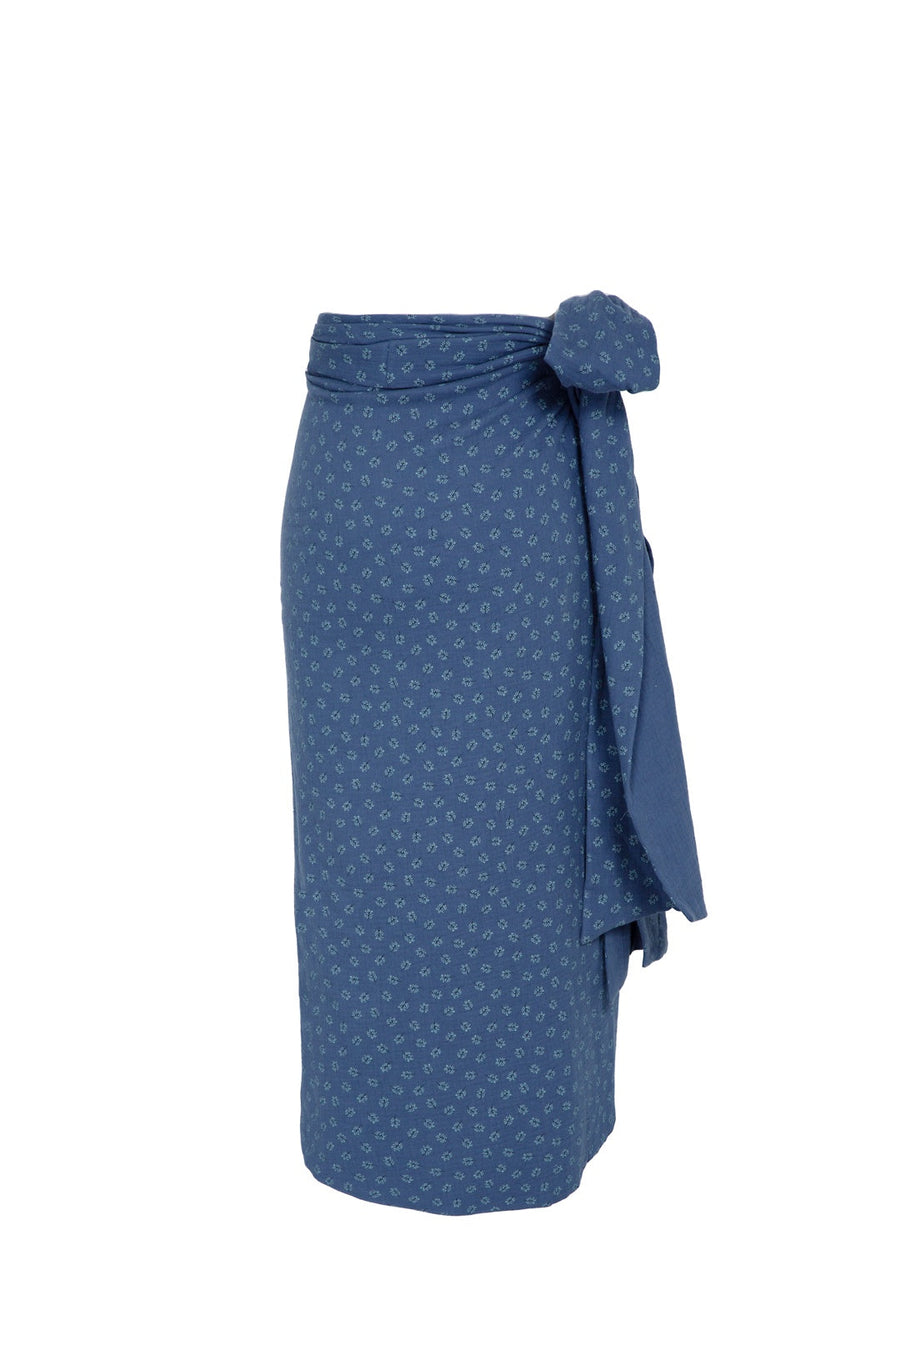 Falda azul multiposición reversible